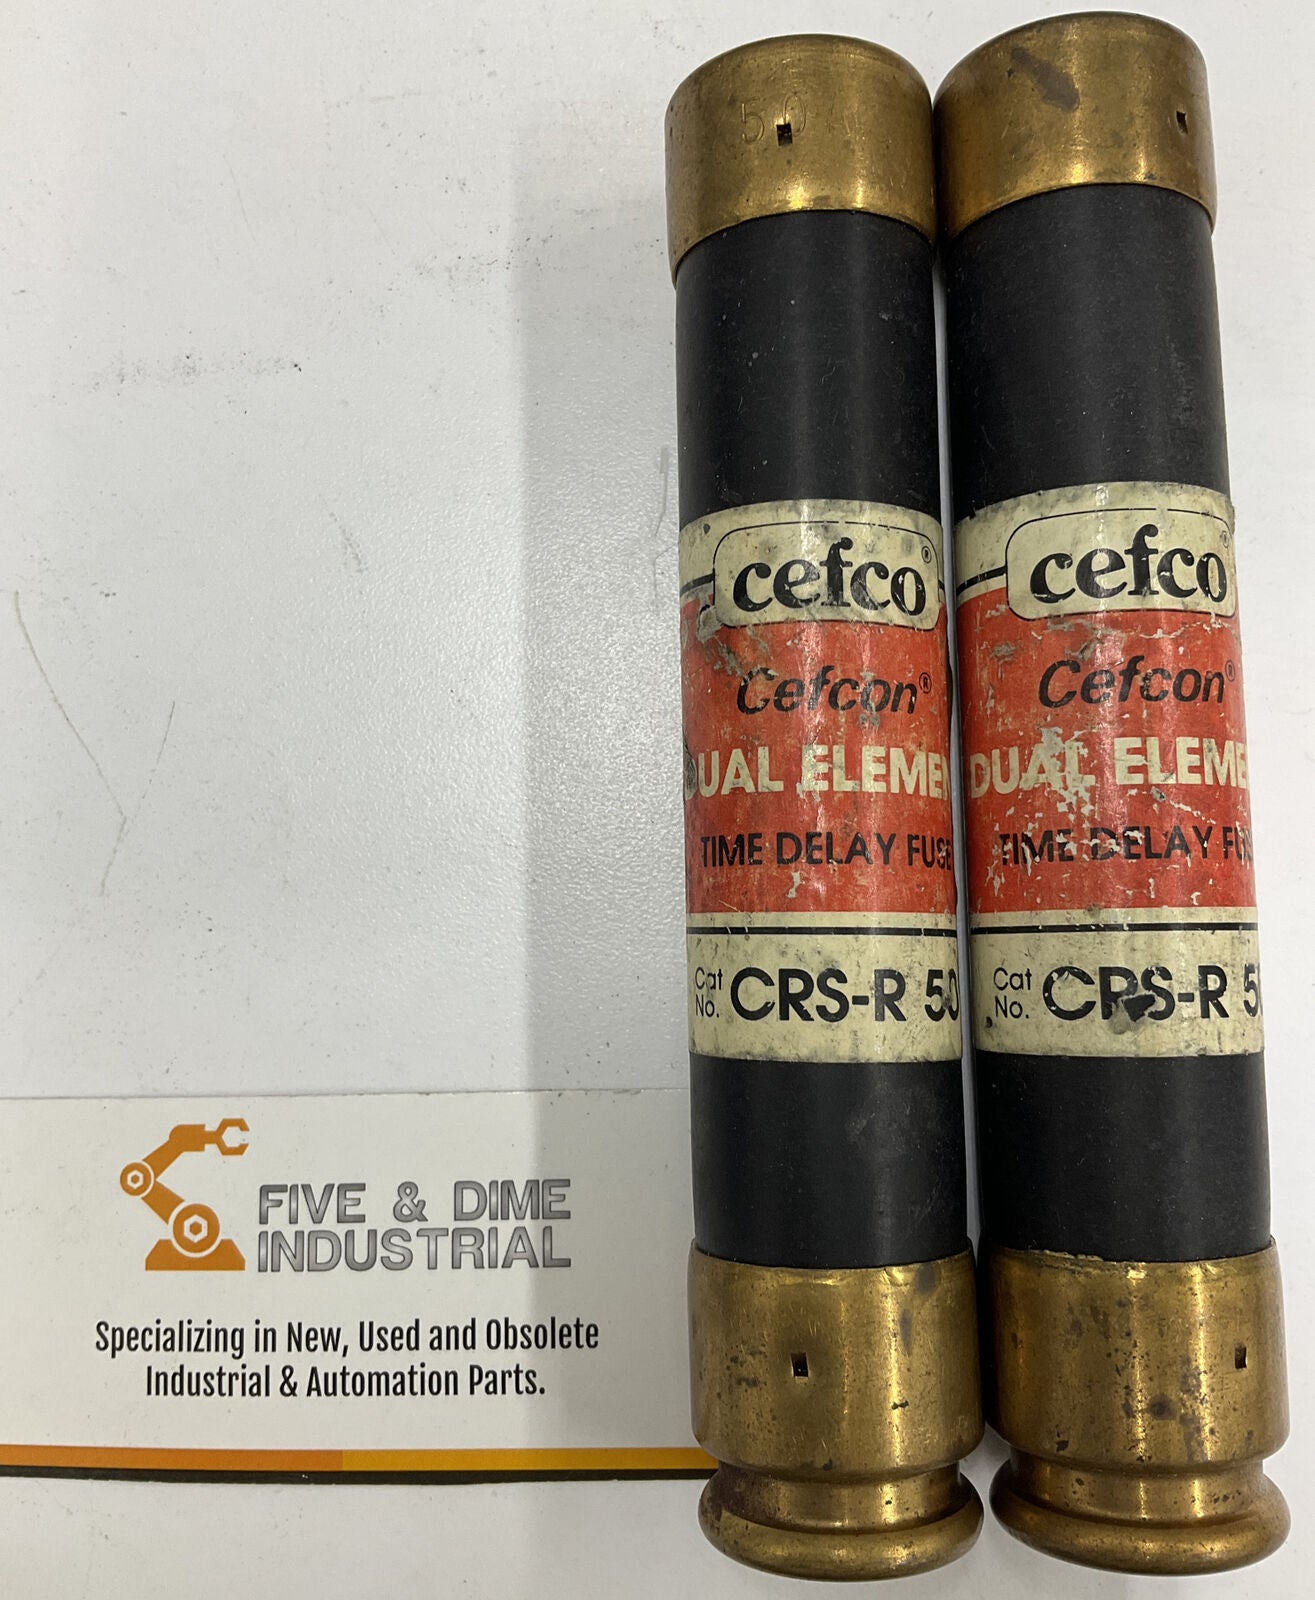 Cefcon CRS-R-50 Lot of (2)  Dual Element Fuse (CL130)